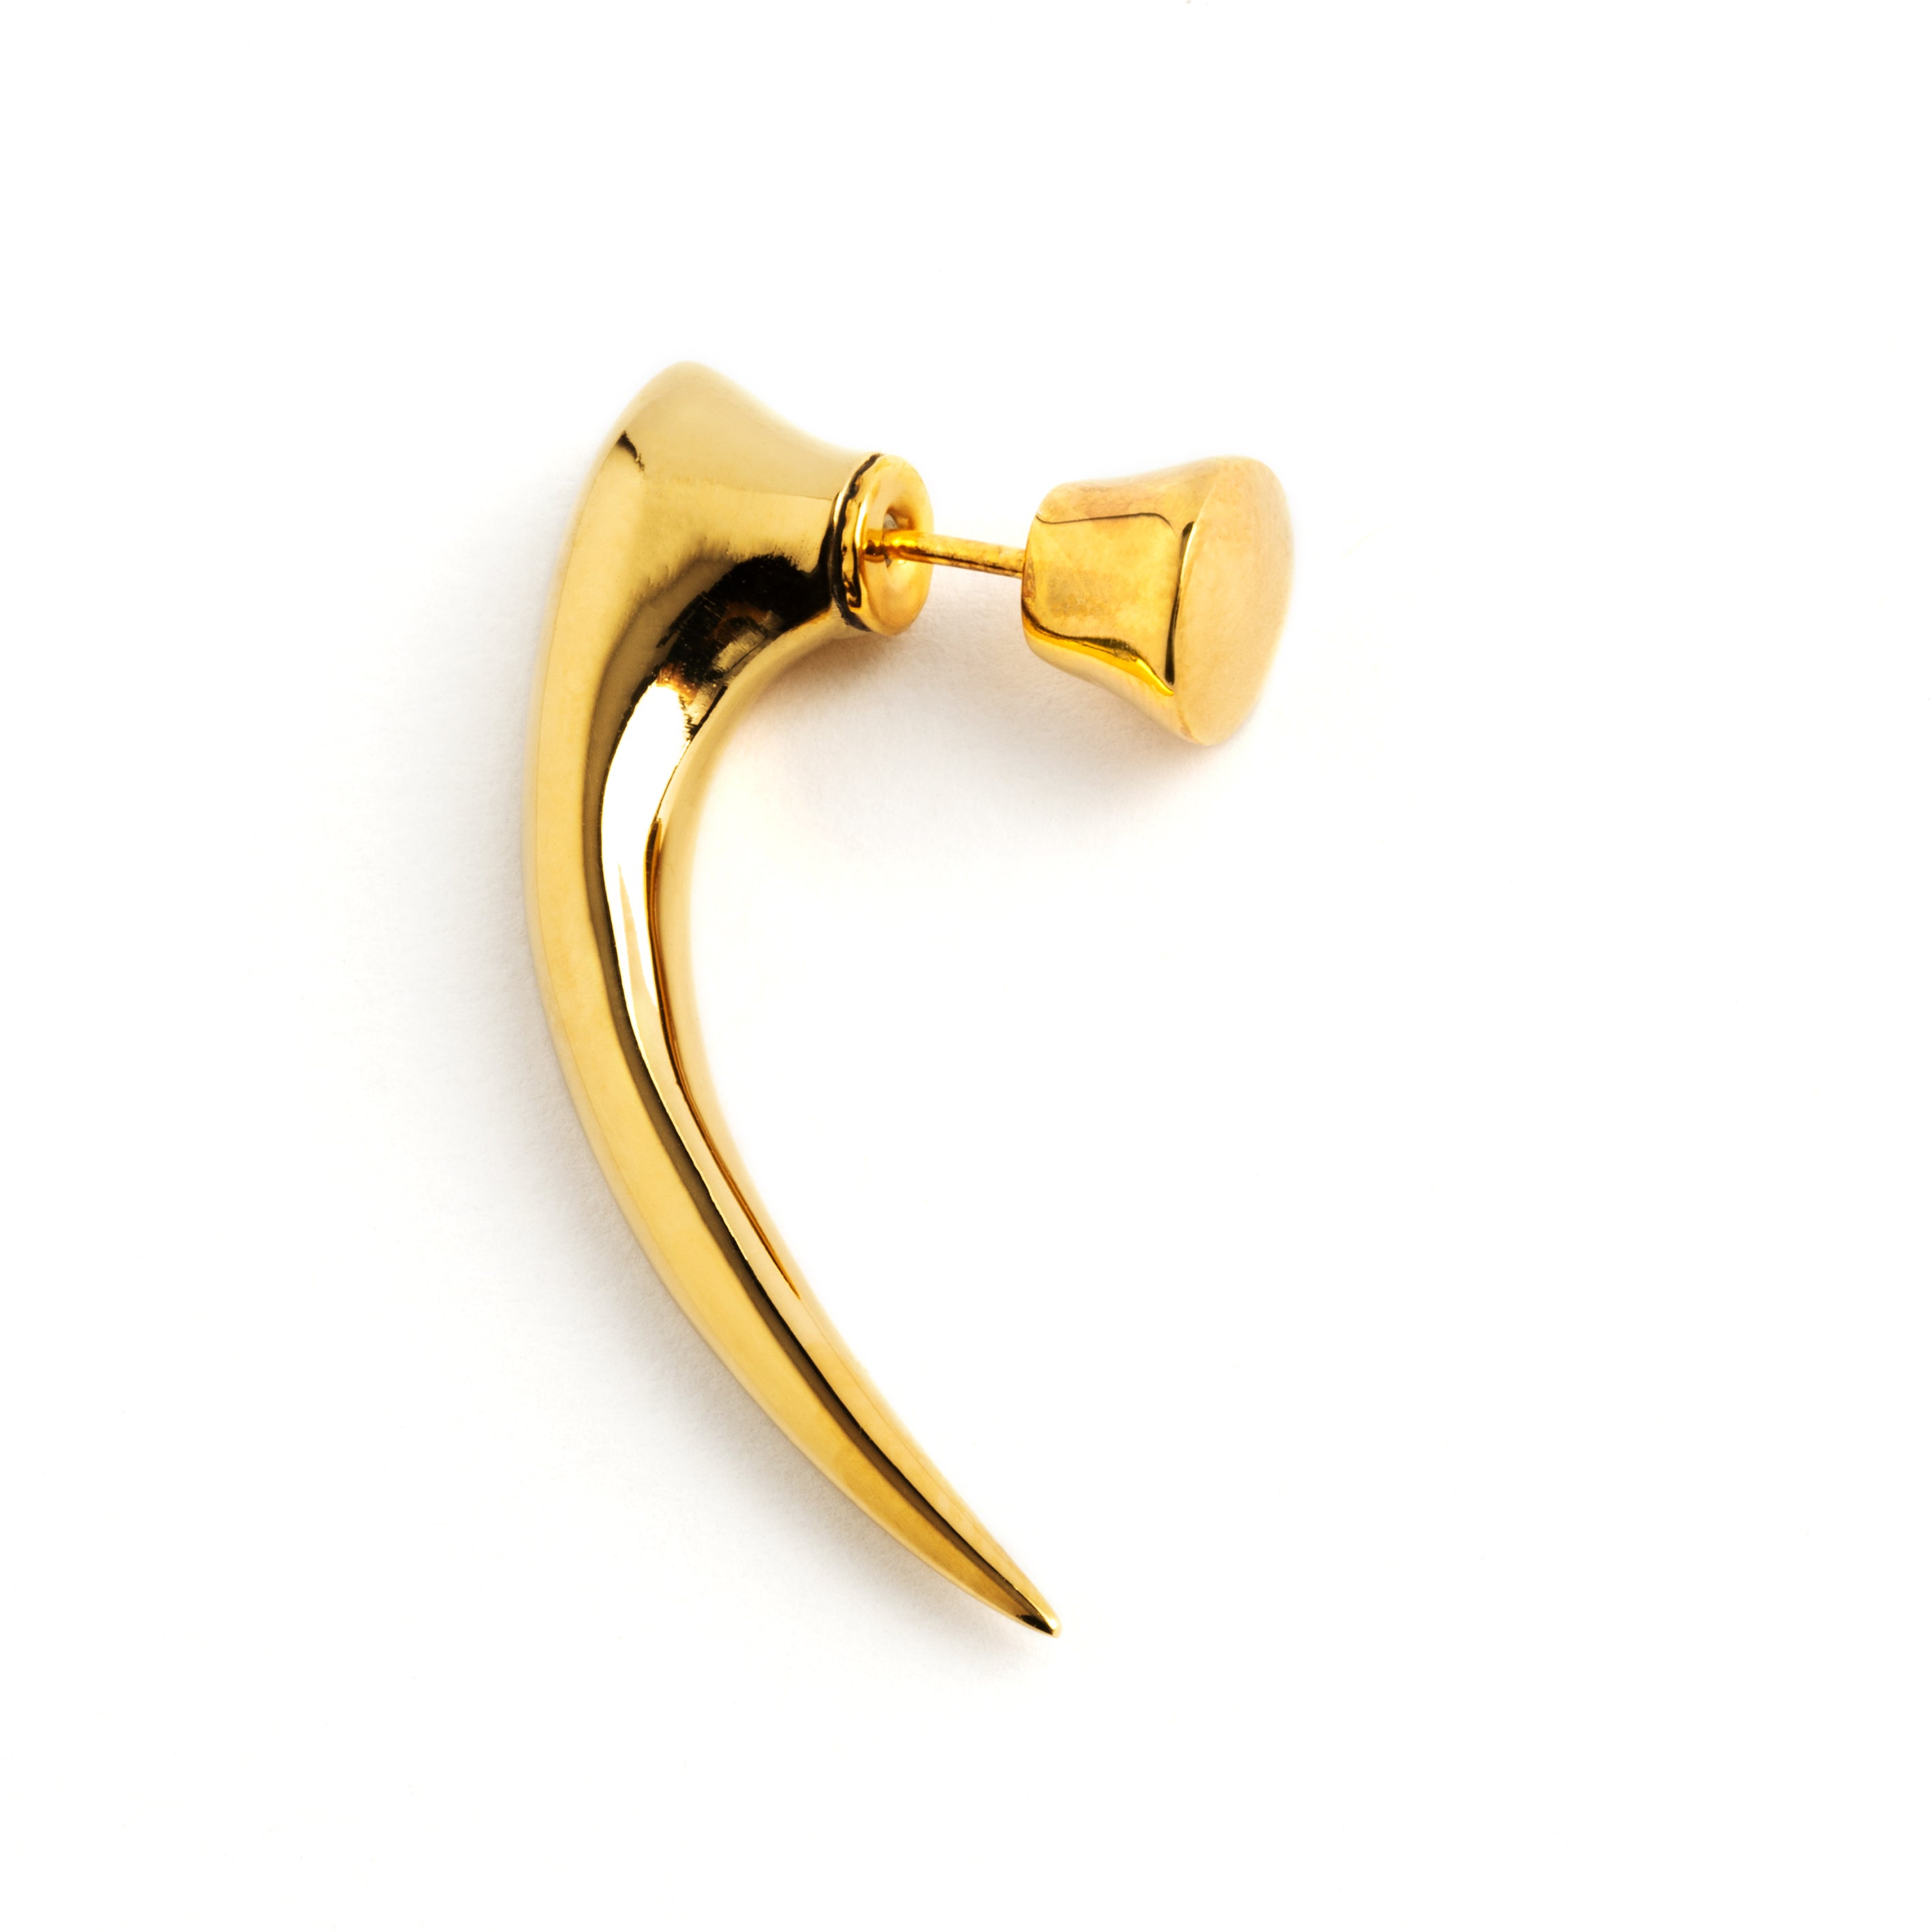 Gold talon spike fake gauge earring right side view